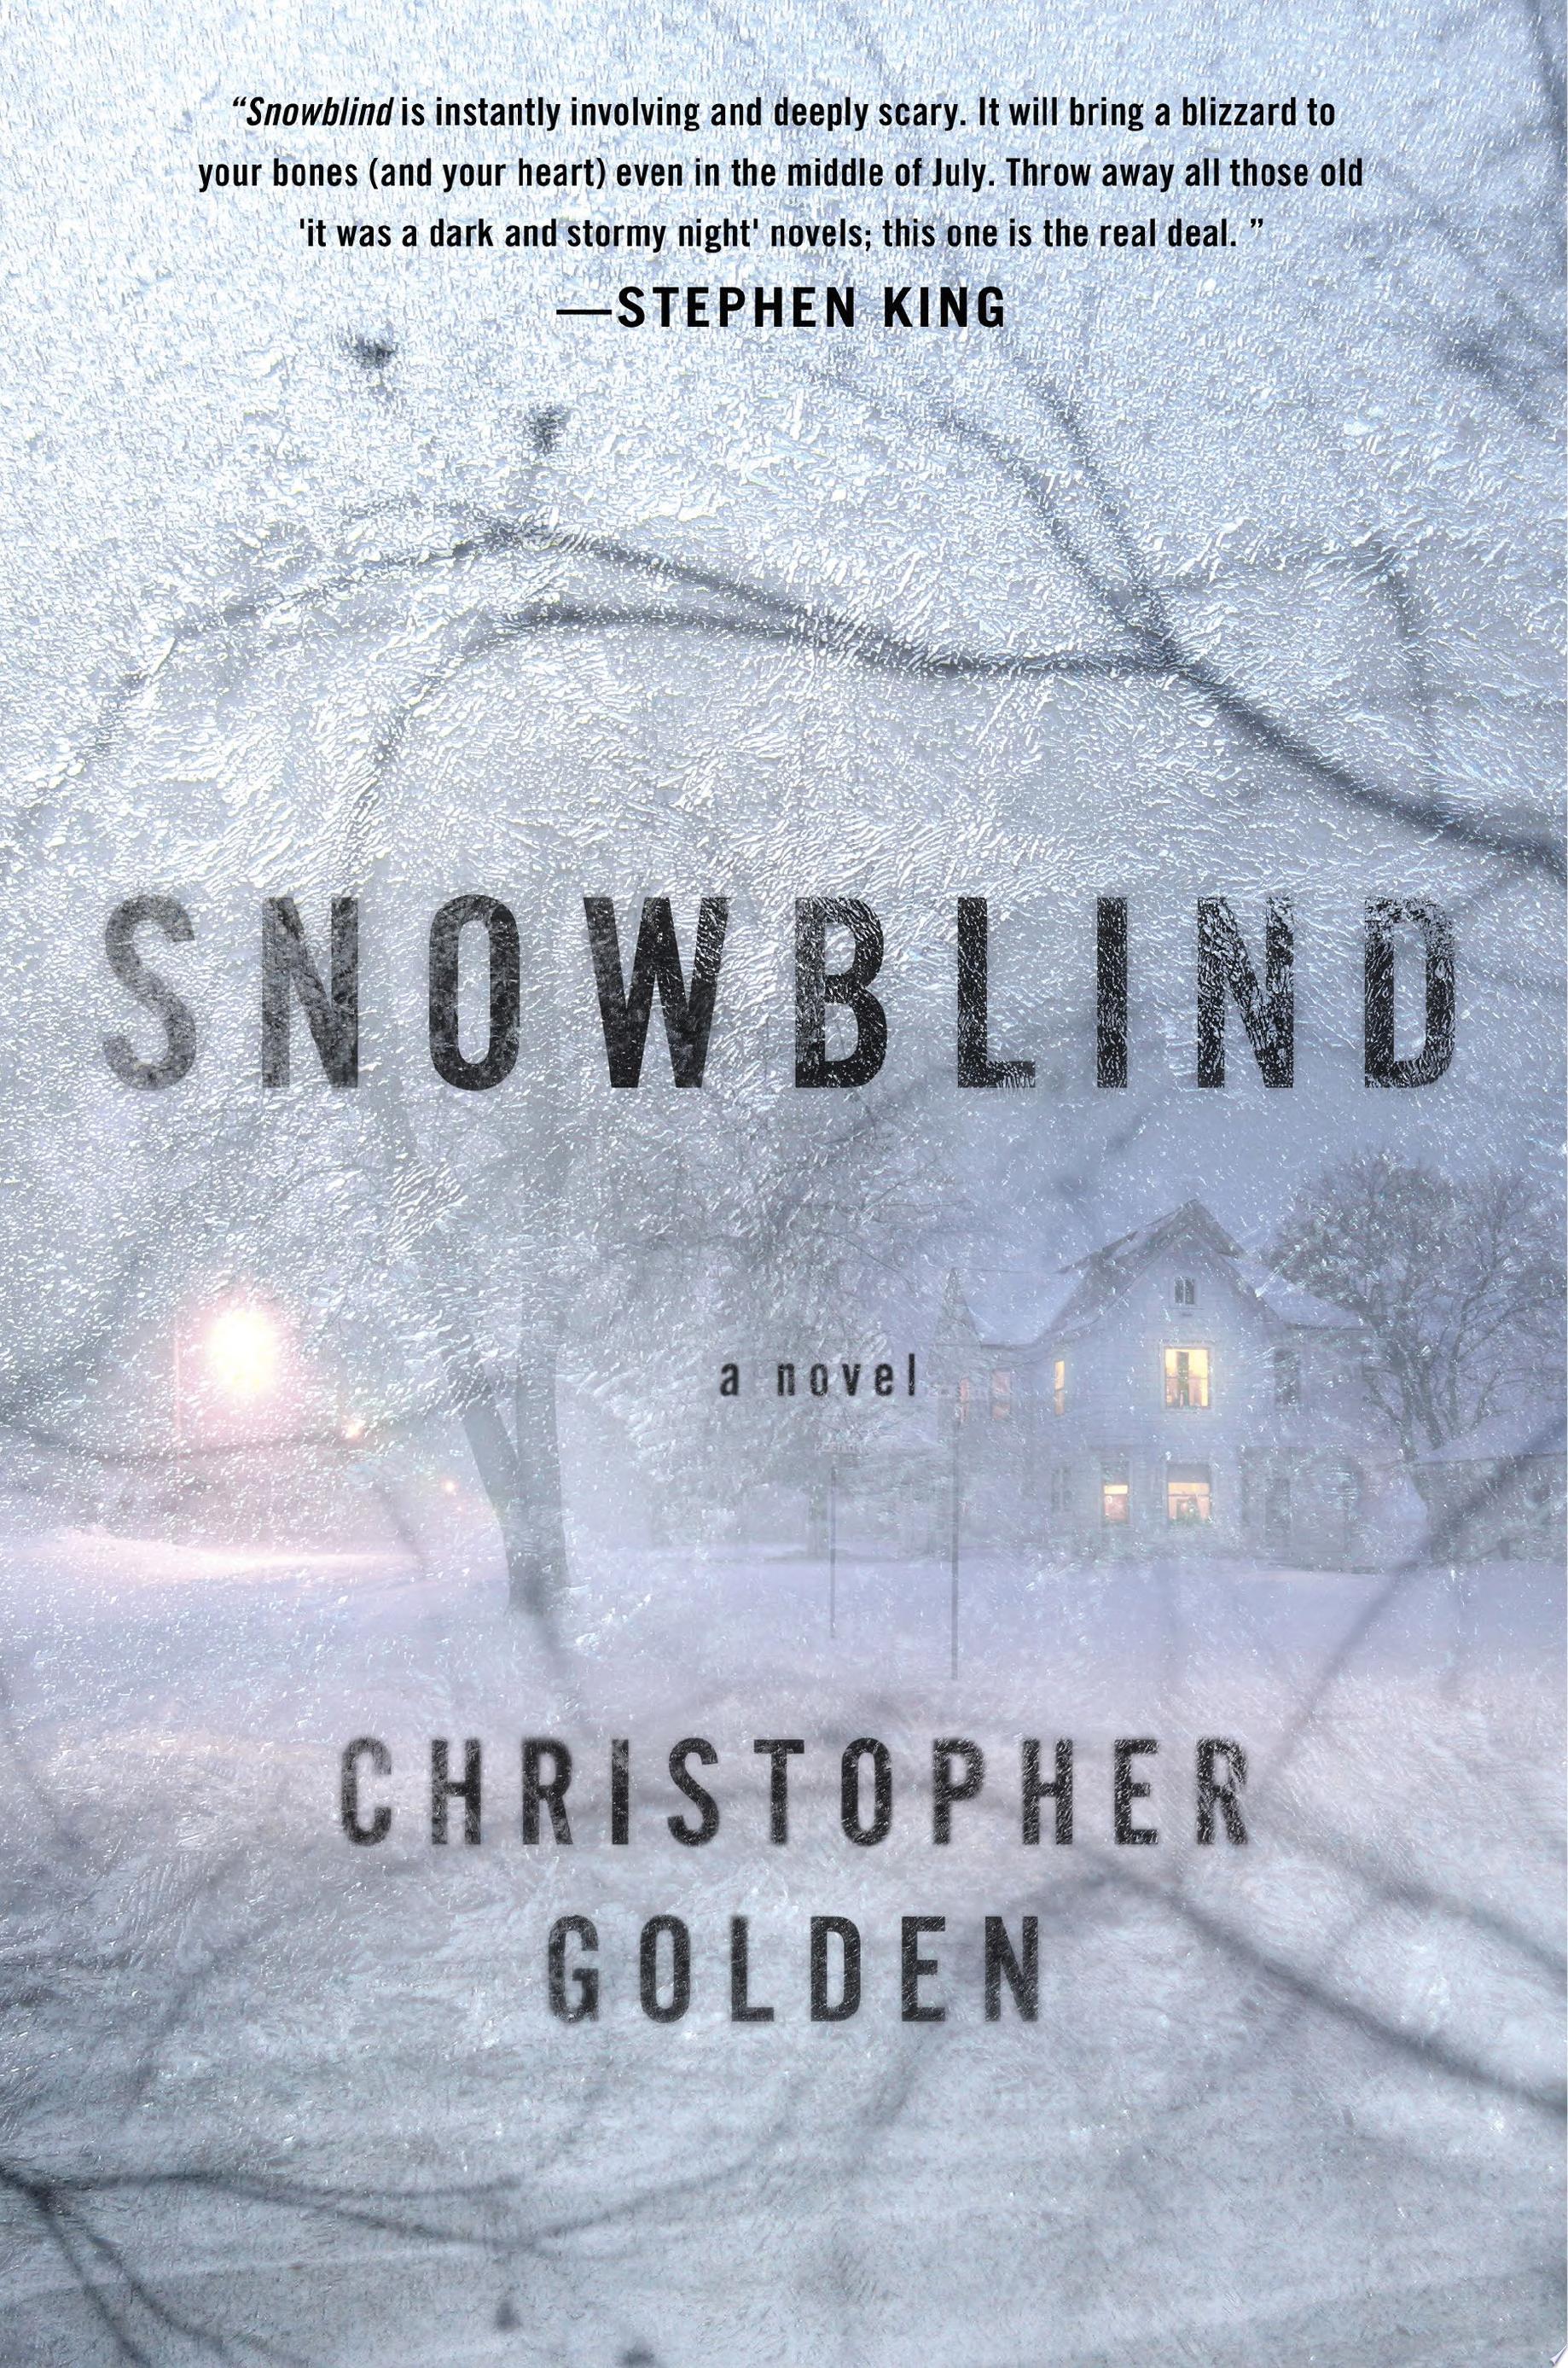 Image for "Snowblind"